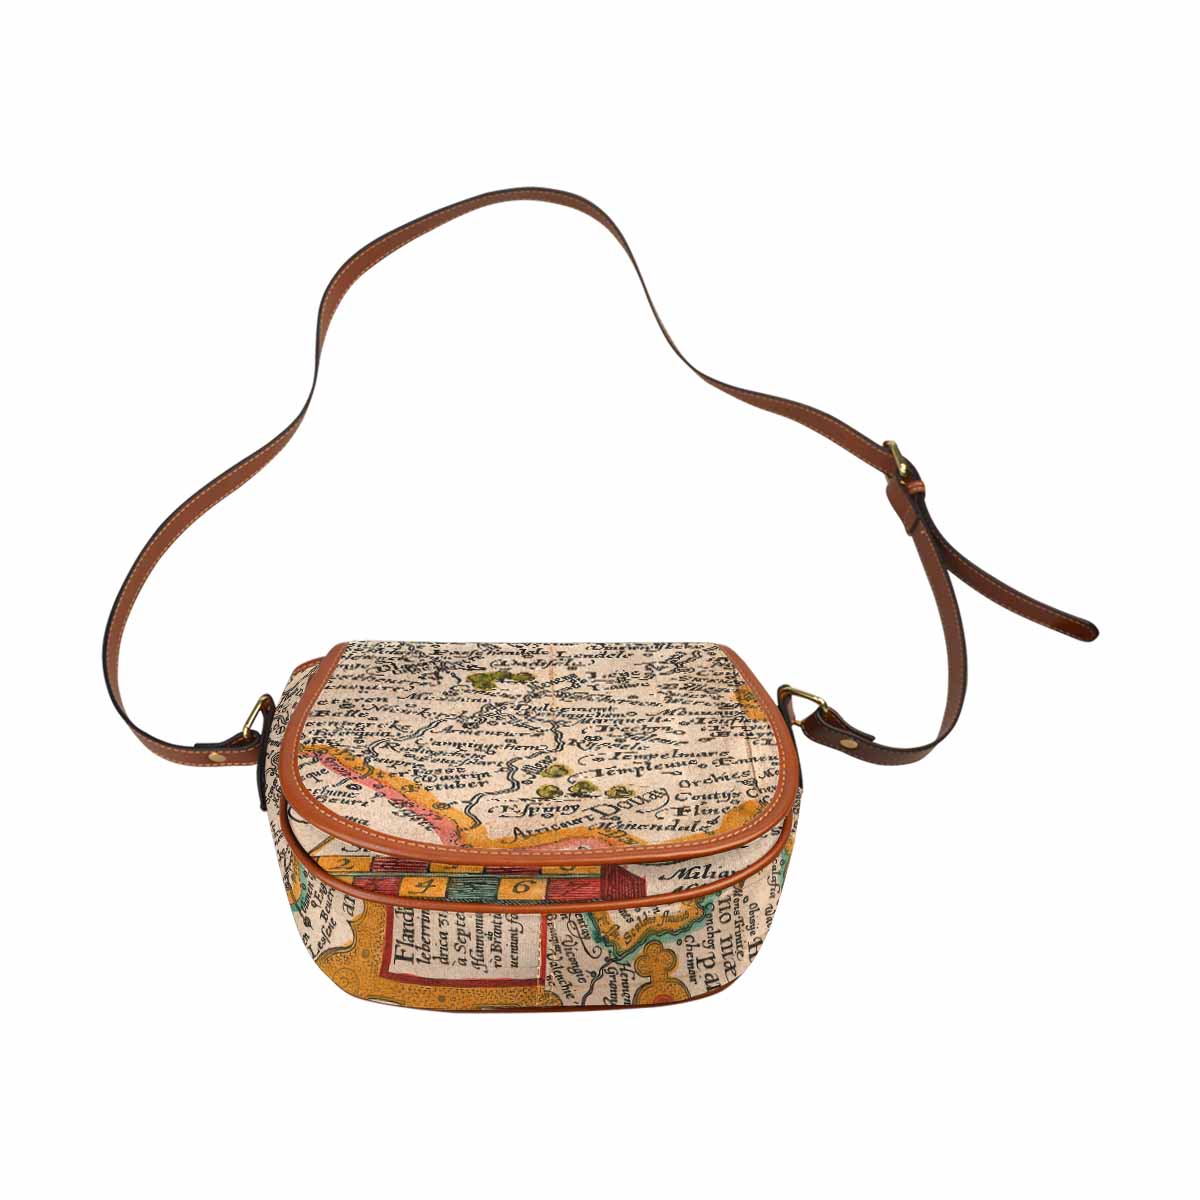 Antique Map design Handbag, saddle bag, Design 12